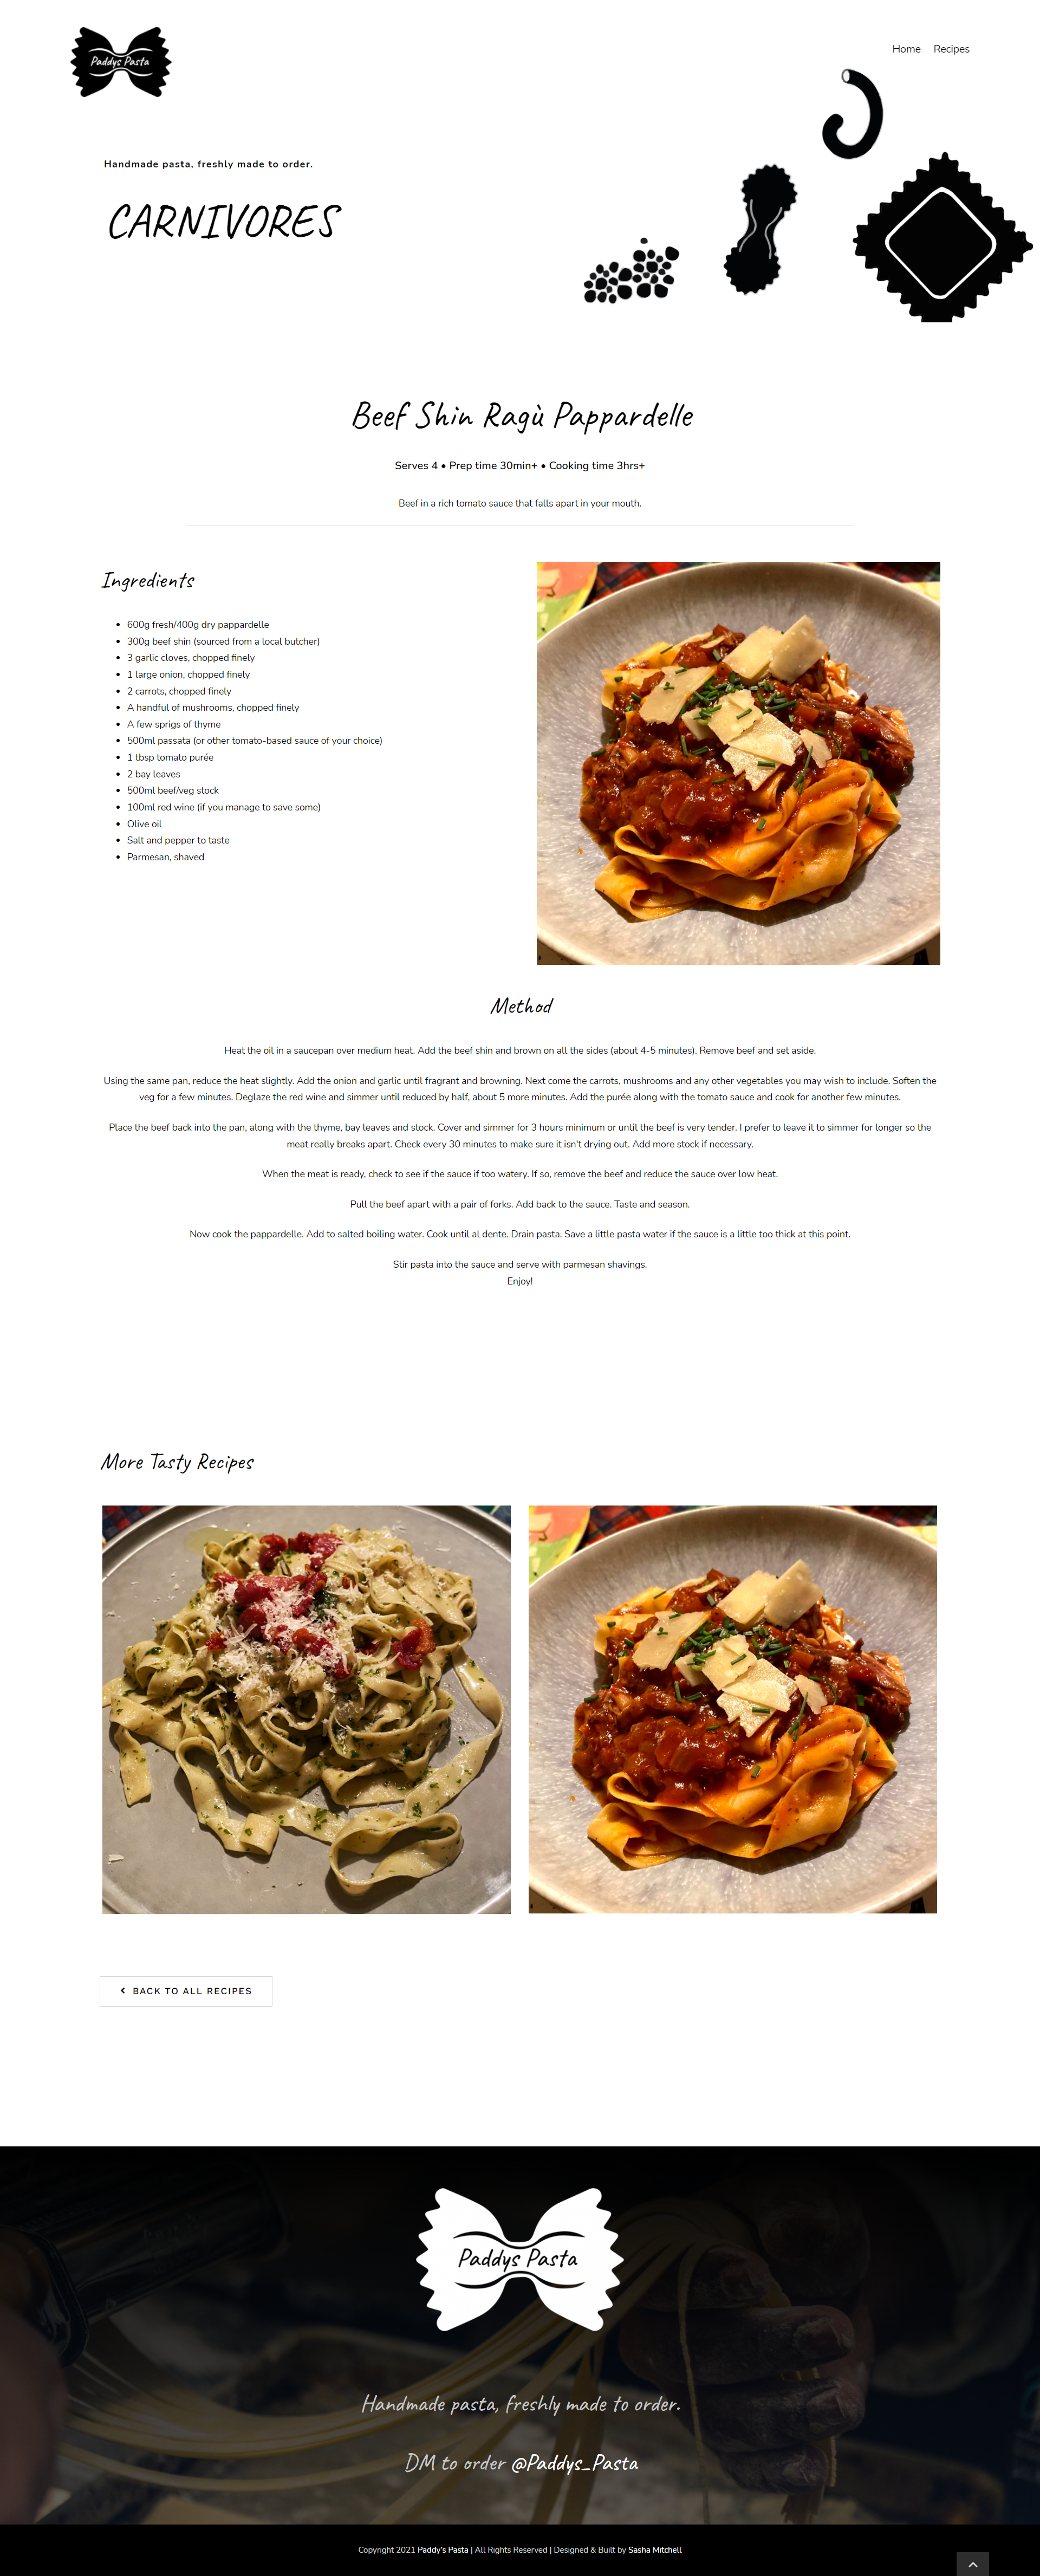 Paddys Pasta Website Screenshot